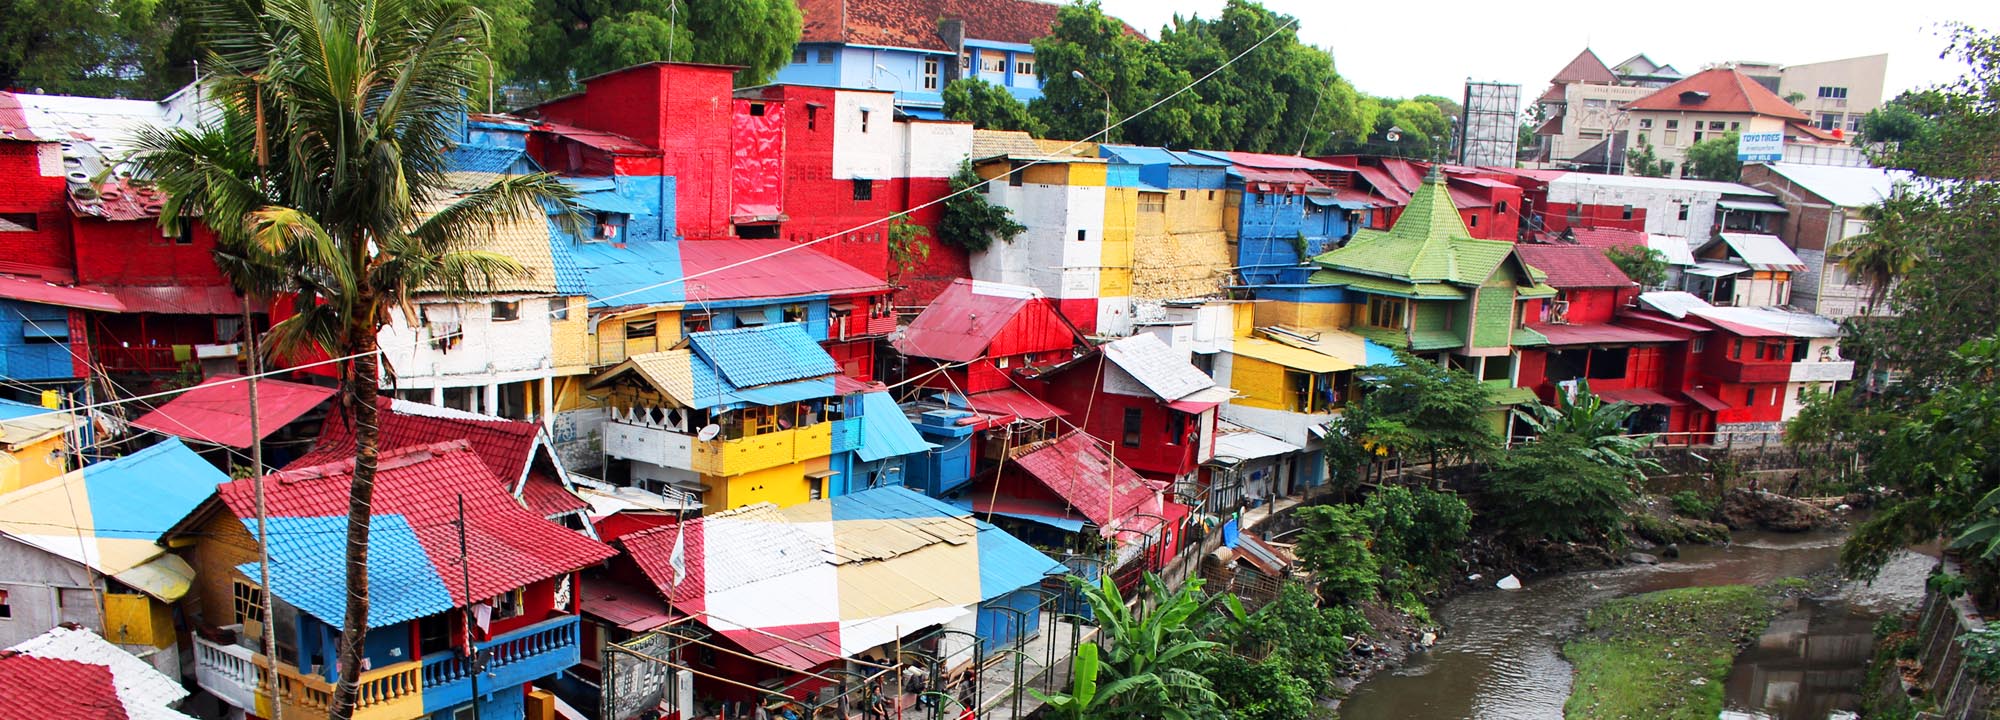 Barevný slum